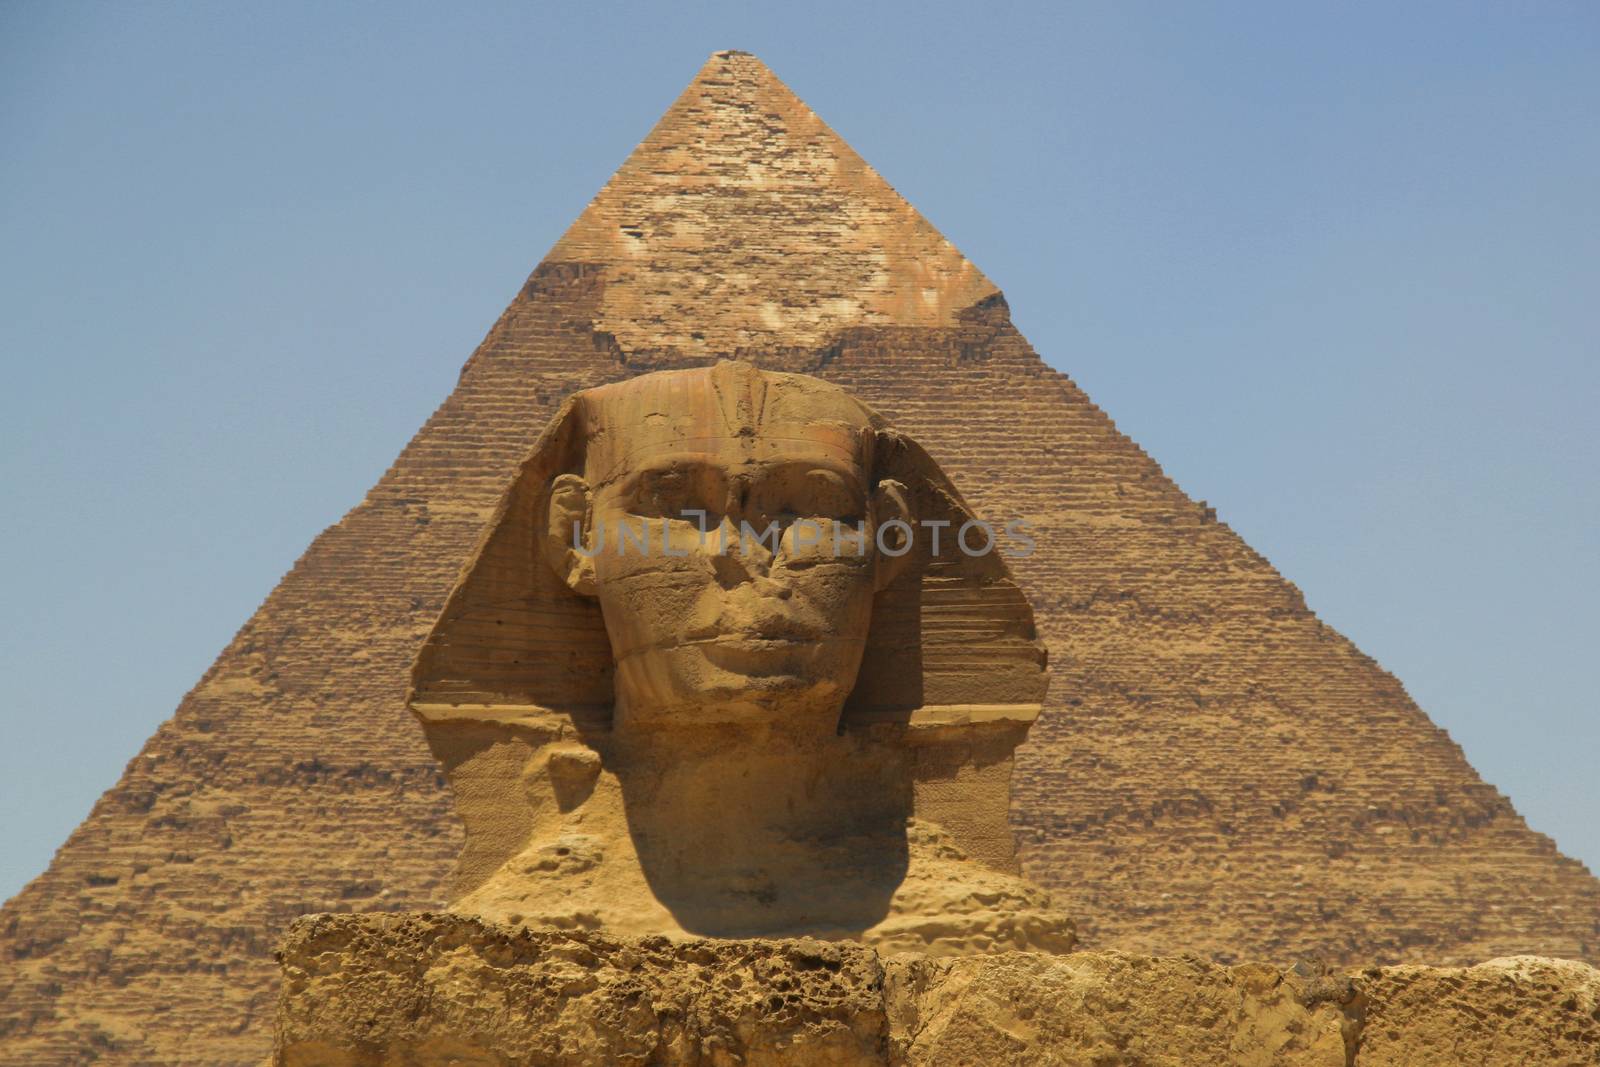 Pyramid of Khafre (Chepren) and the Sphinx in Giza - Cairo - Egypt
